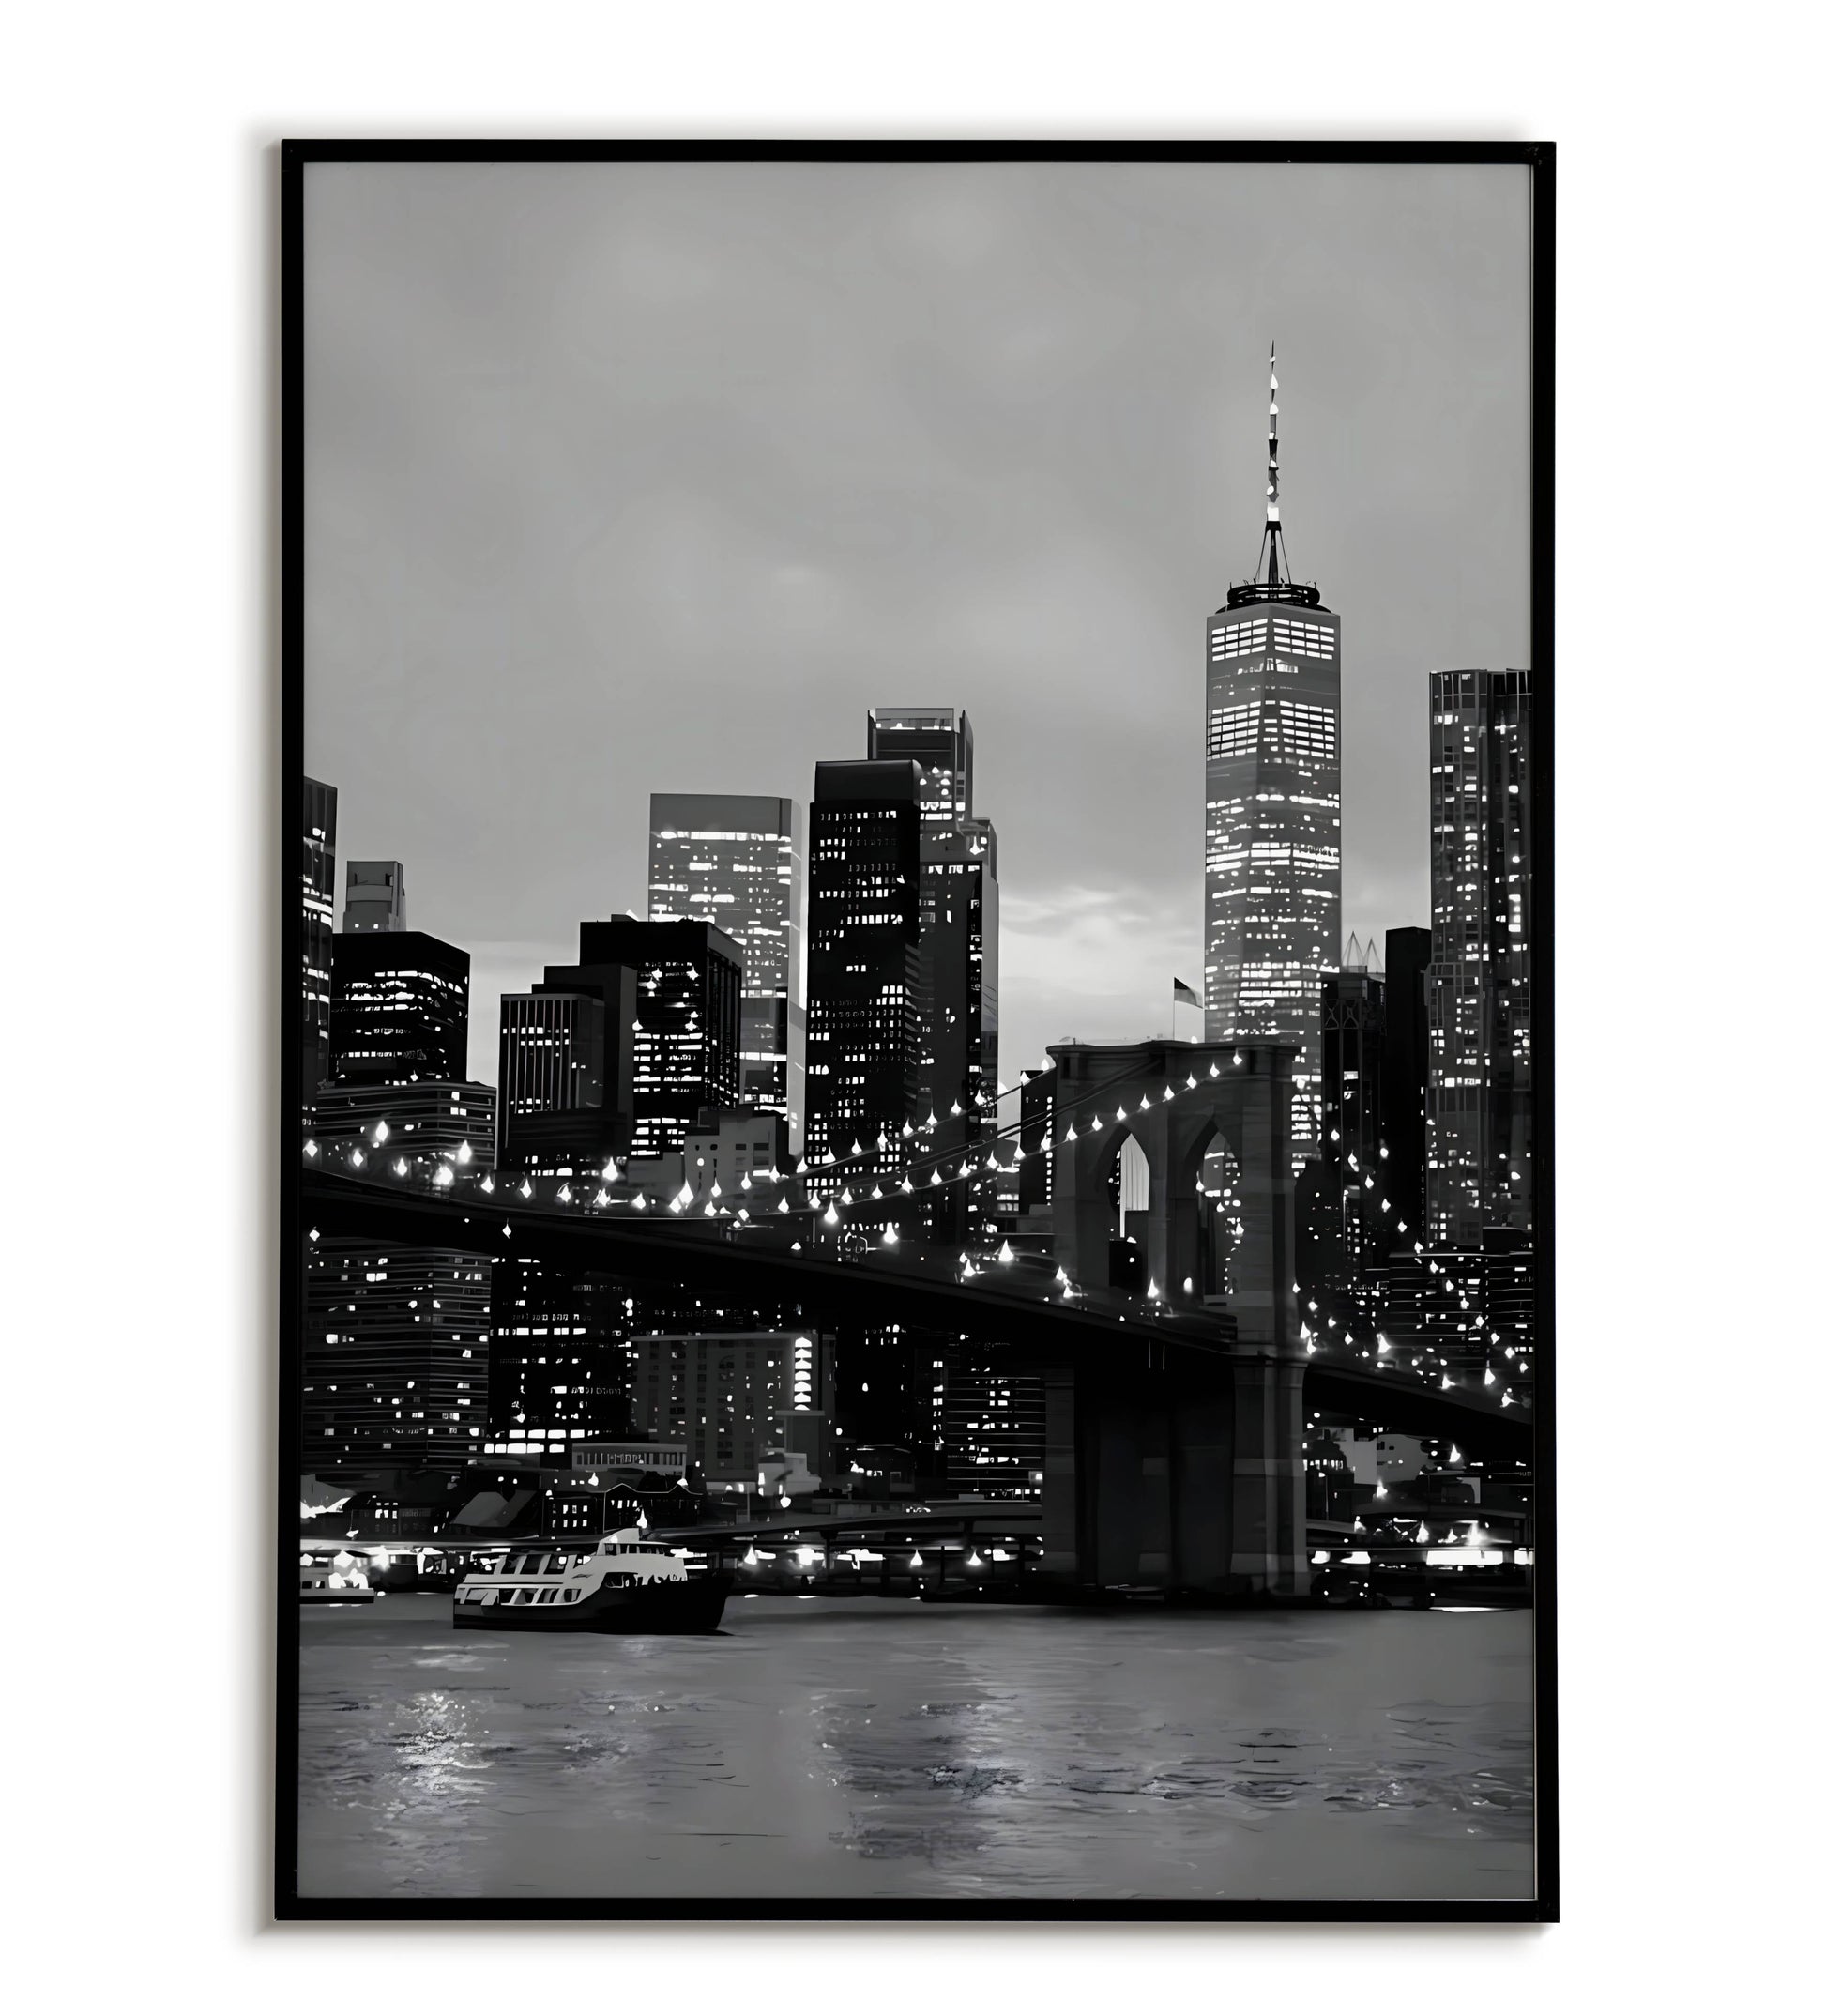 Brooklyn Bridge Black & White poster. Classic photograph of the Brooklyn Bridge.